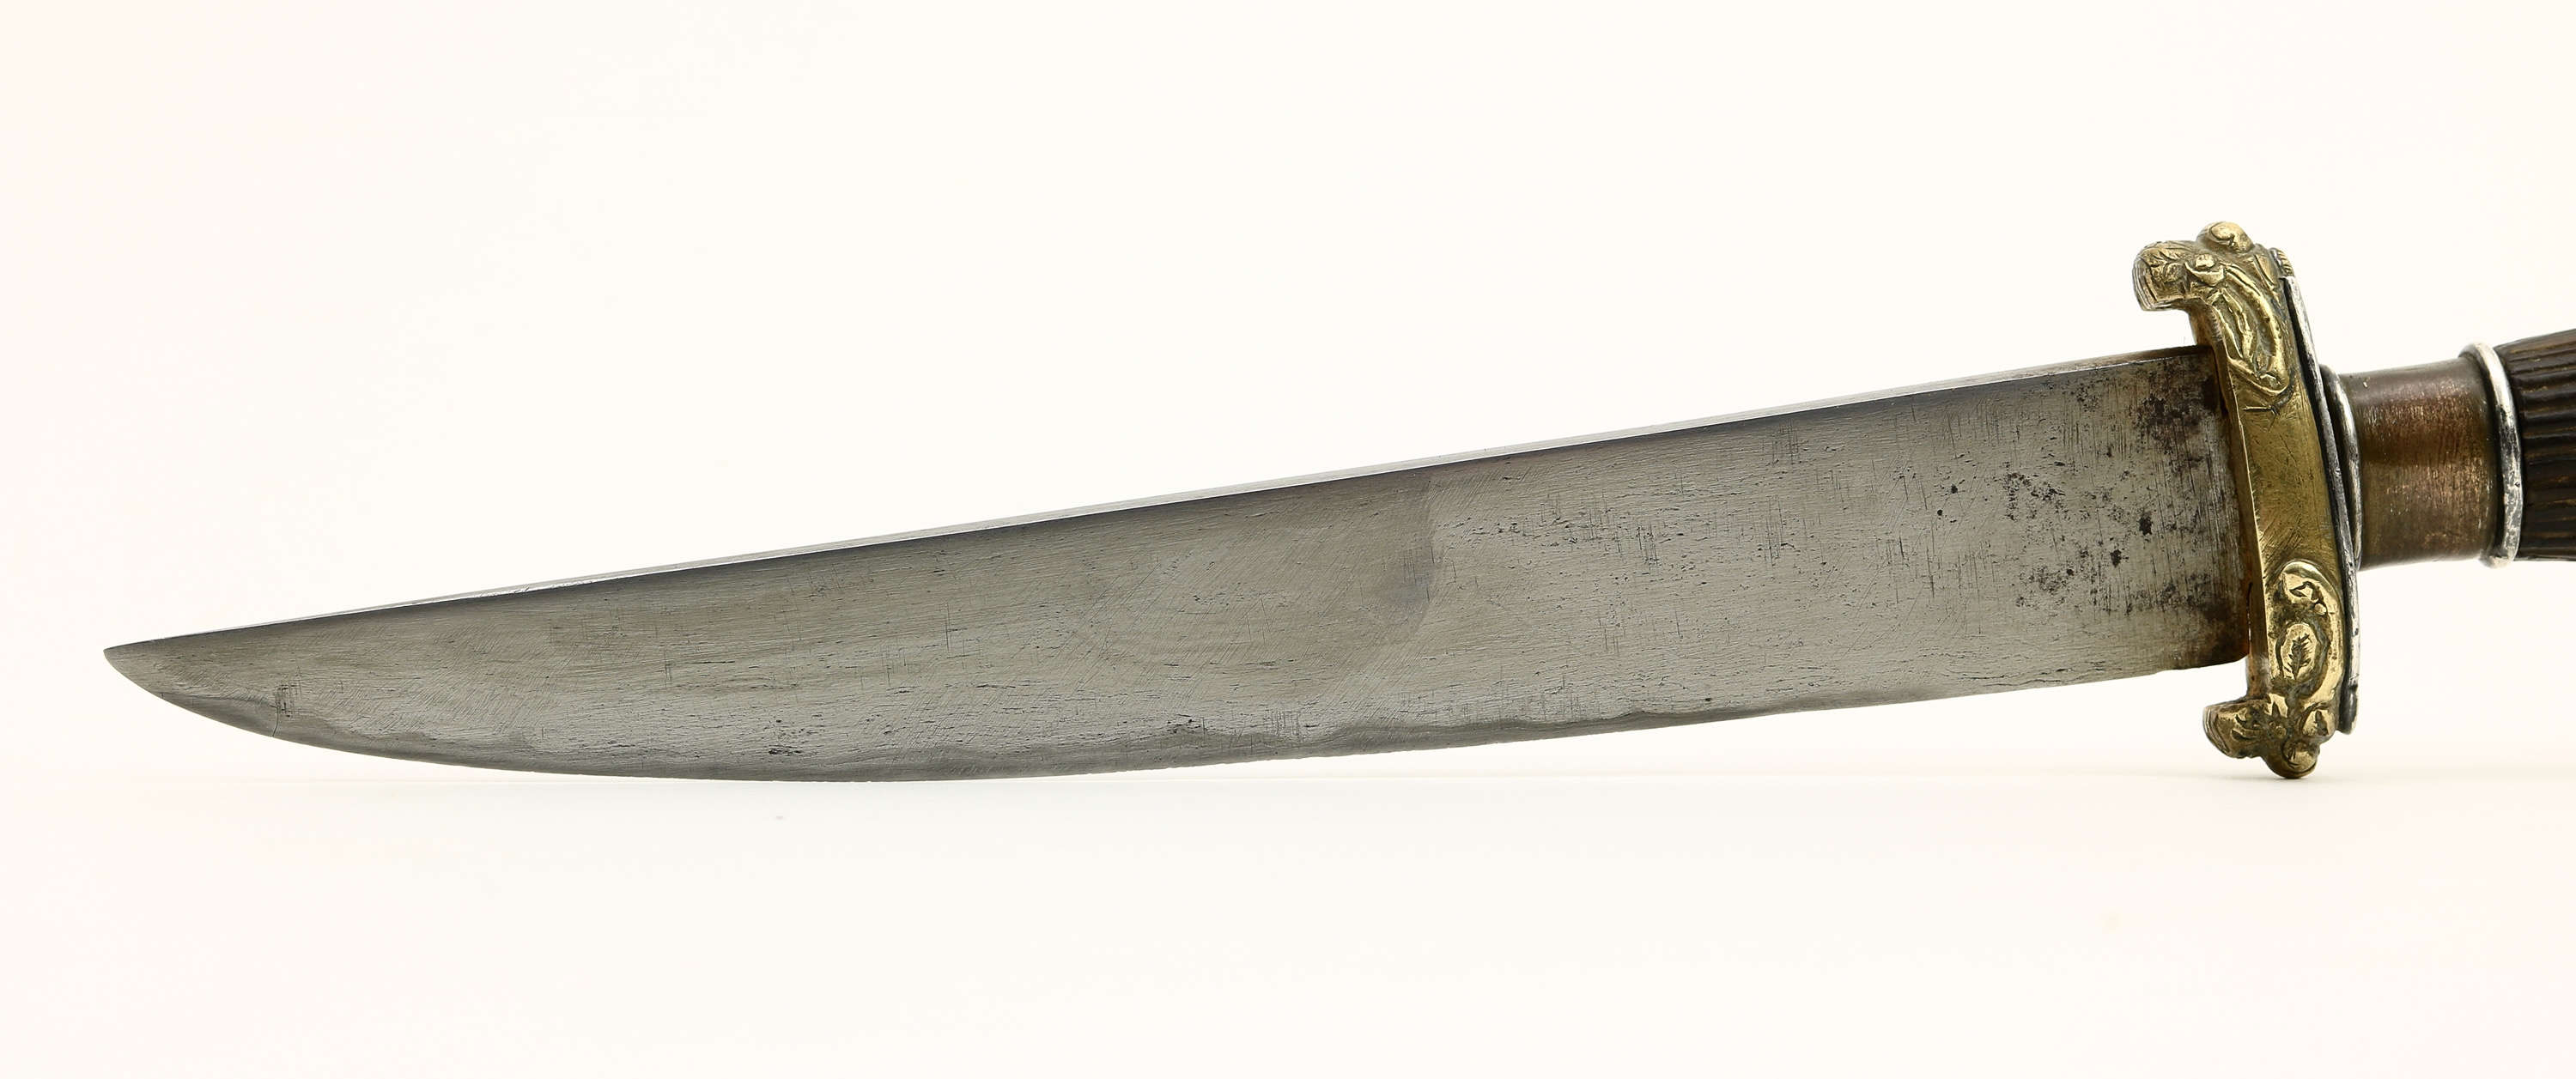 Good antique Vietnamese fighting knife